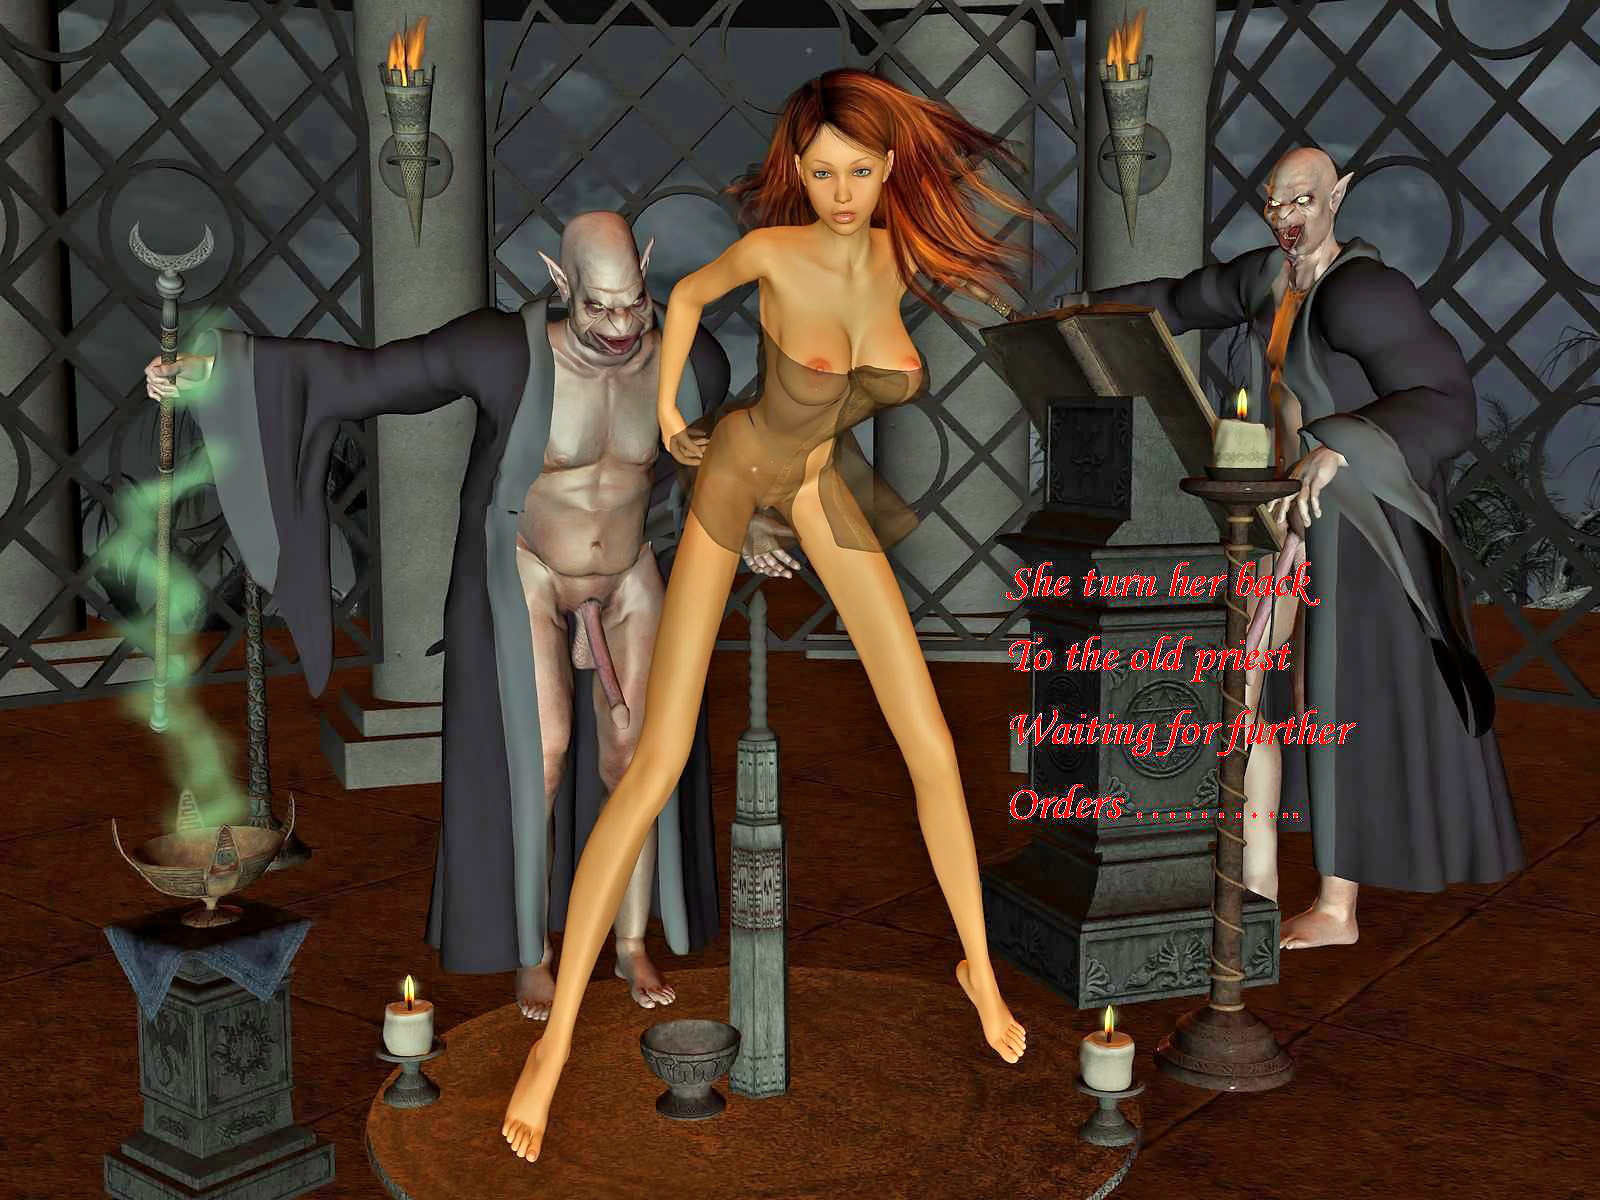 Sexy Cartoon Vampire - Vampire orgies with human girls - xxx 3D comic